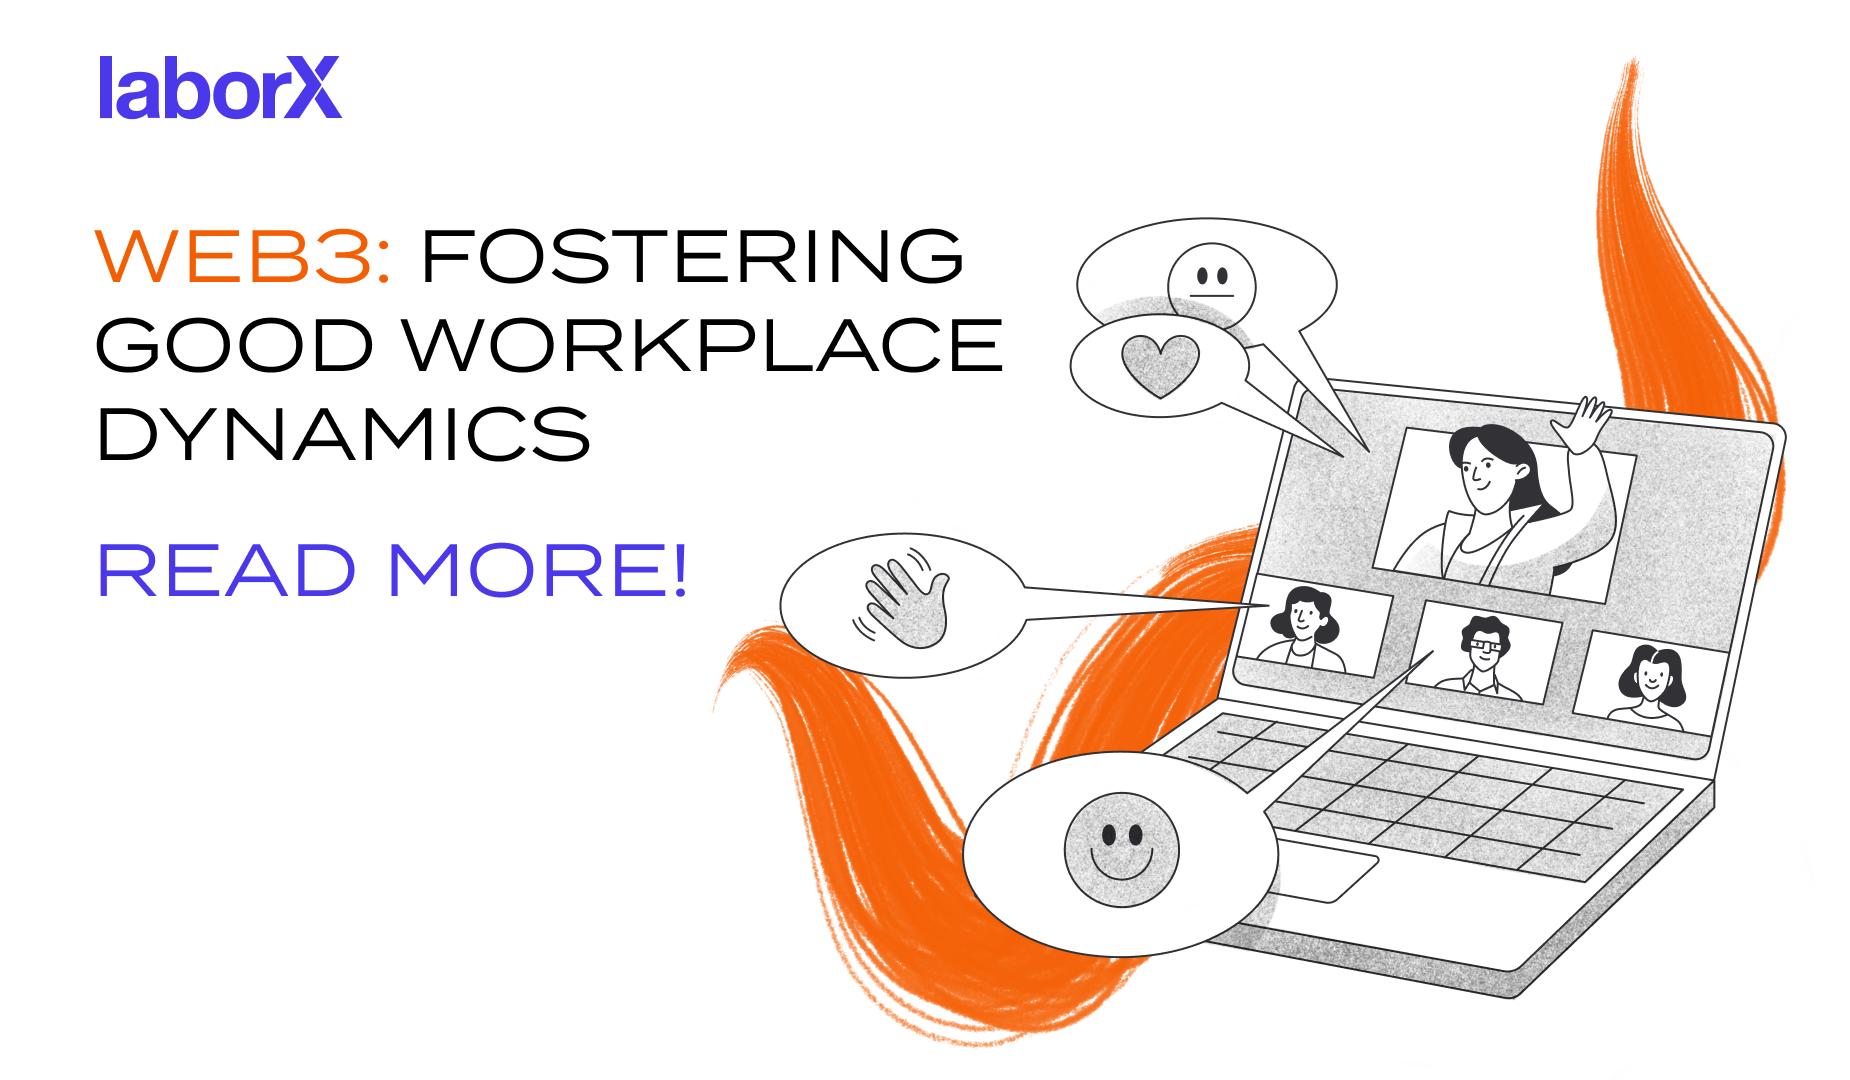 Web3: Fostering Good Workplace Dynamics